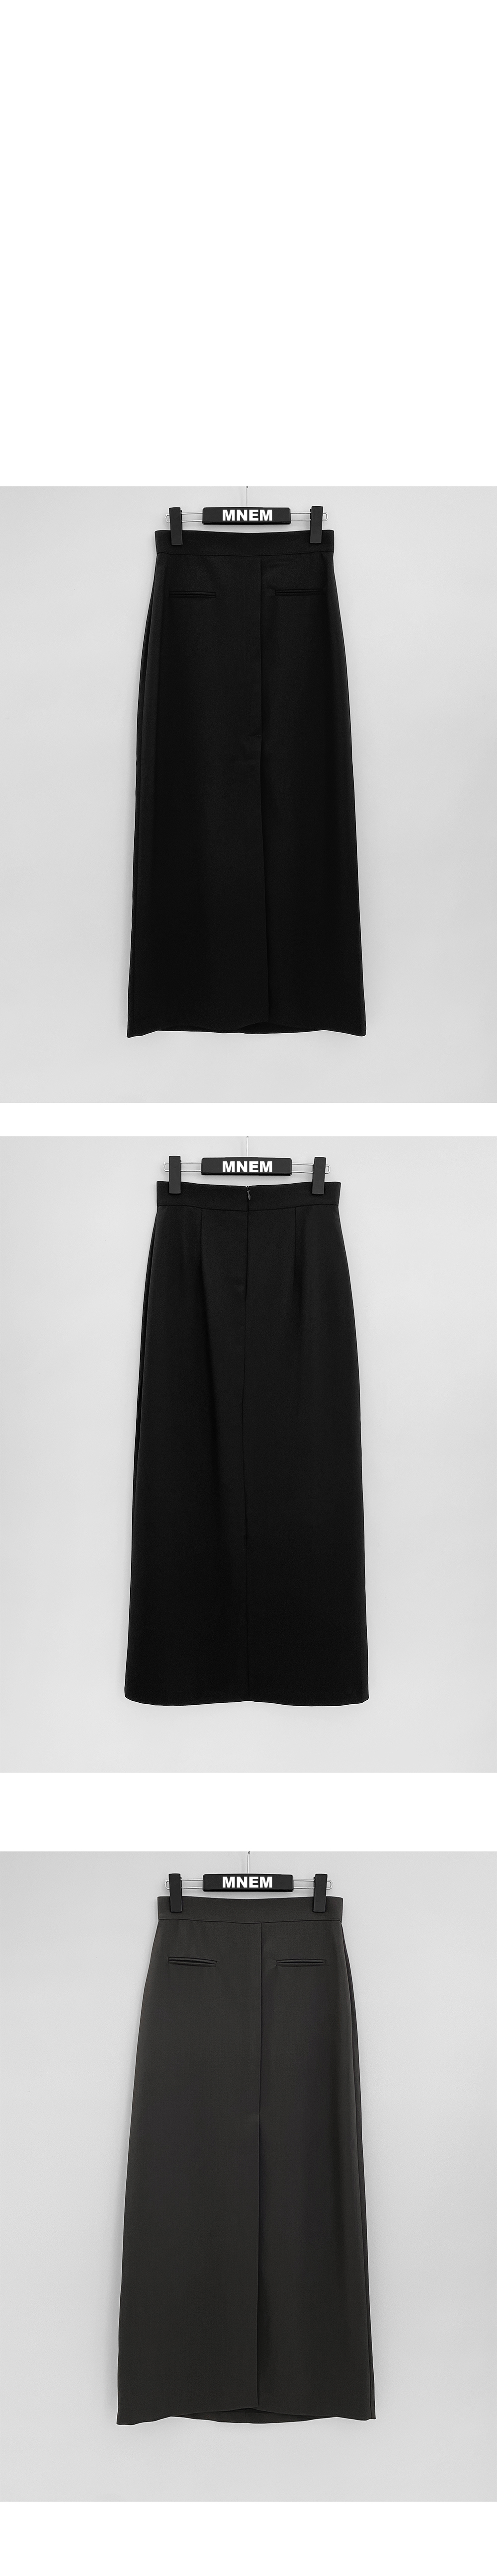 mini skirt charcoal color image-S1L9